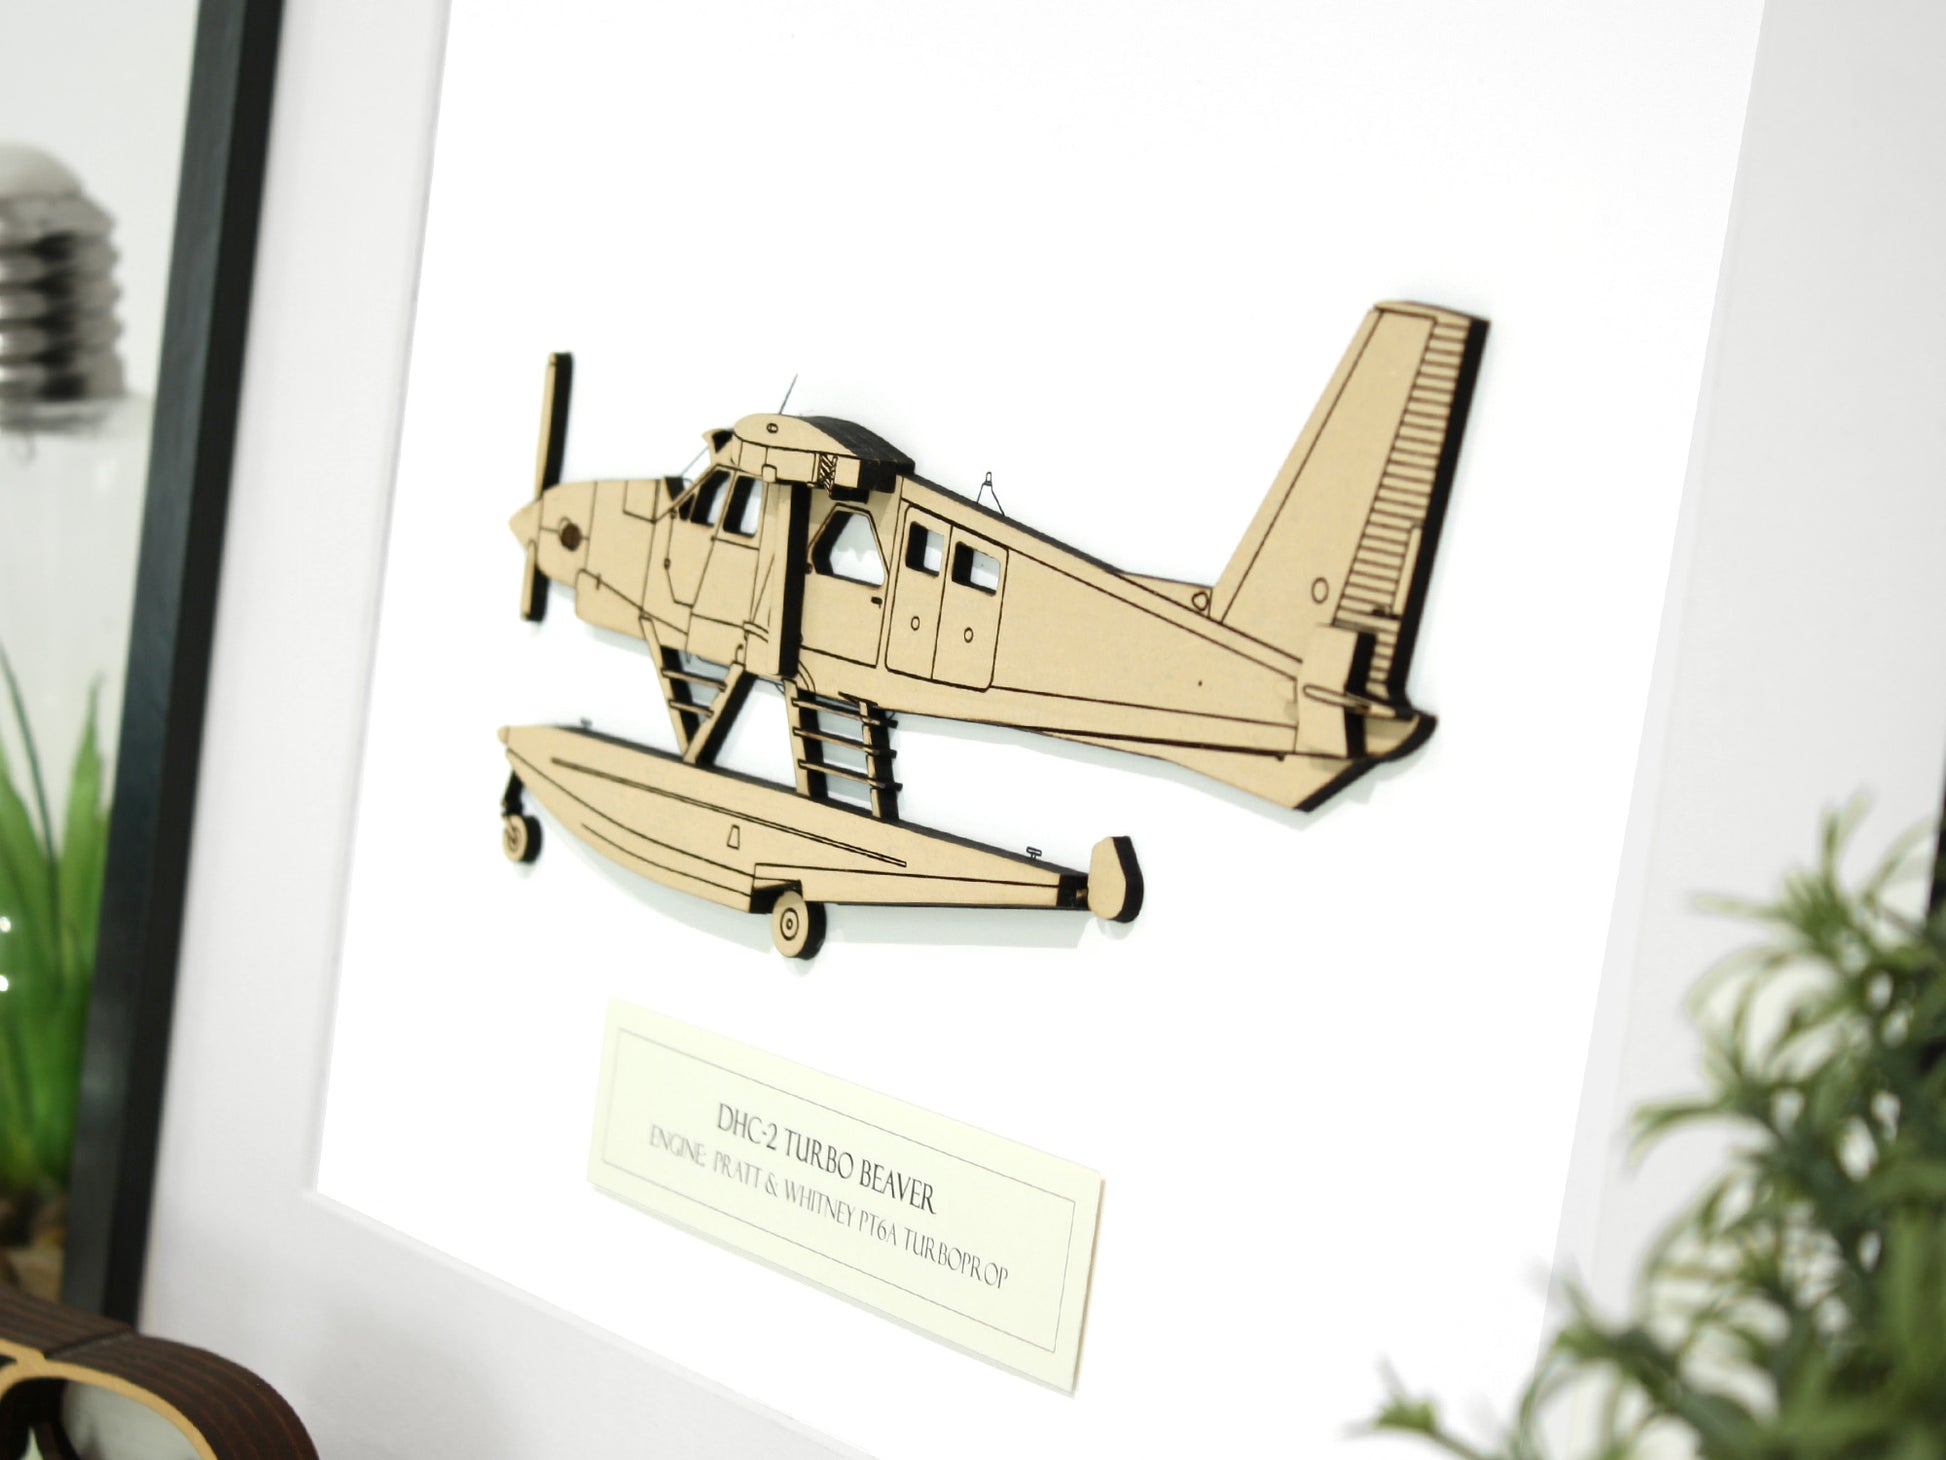 DHC-2 Turbo Beaver pilot gifts